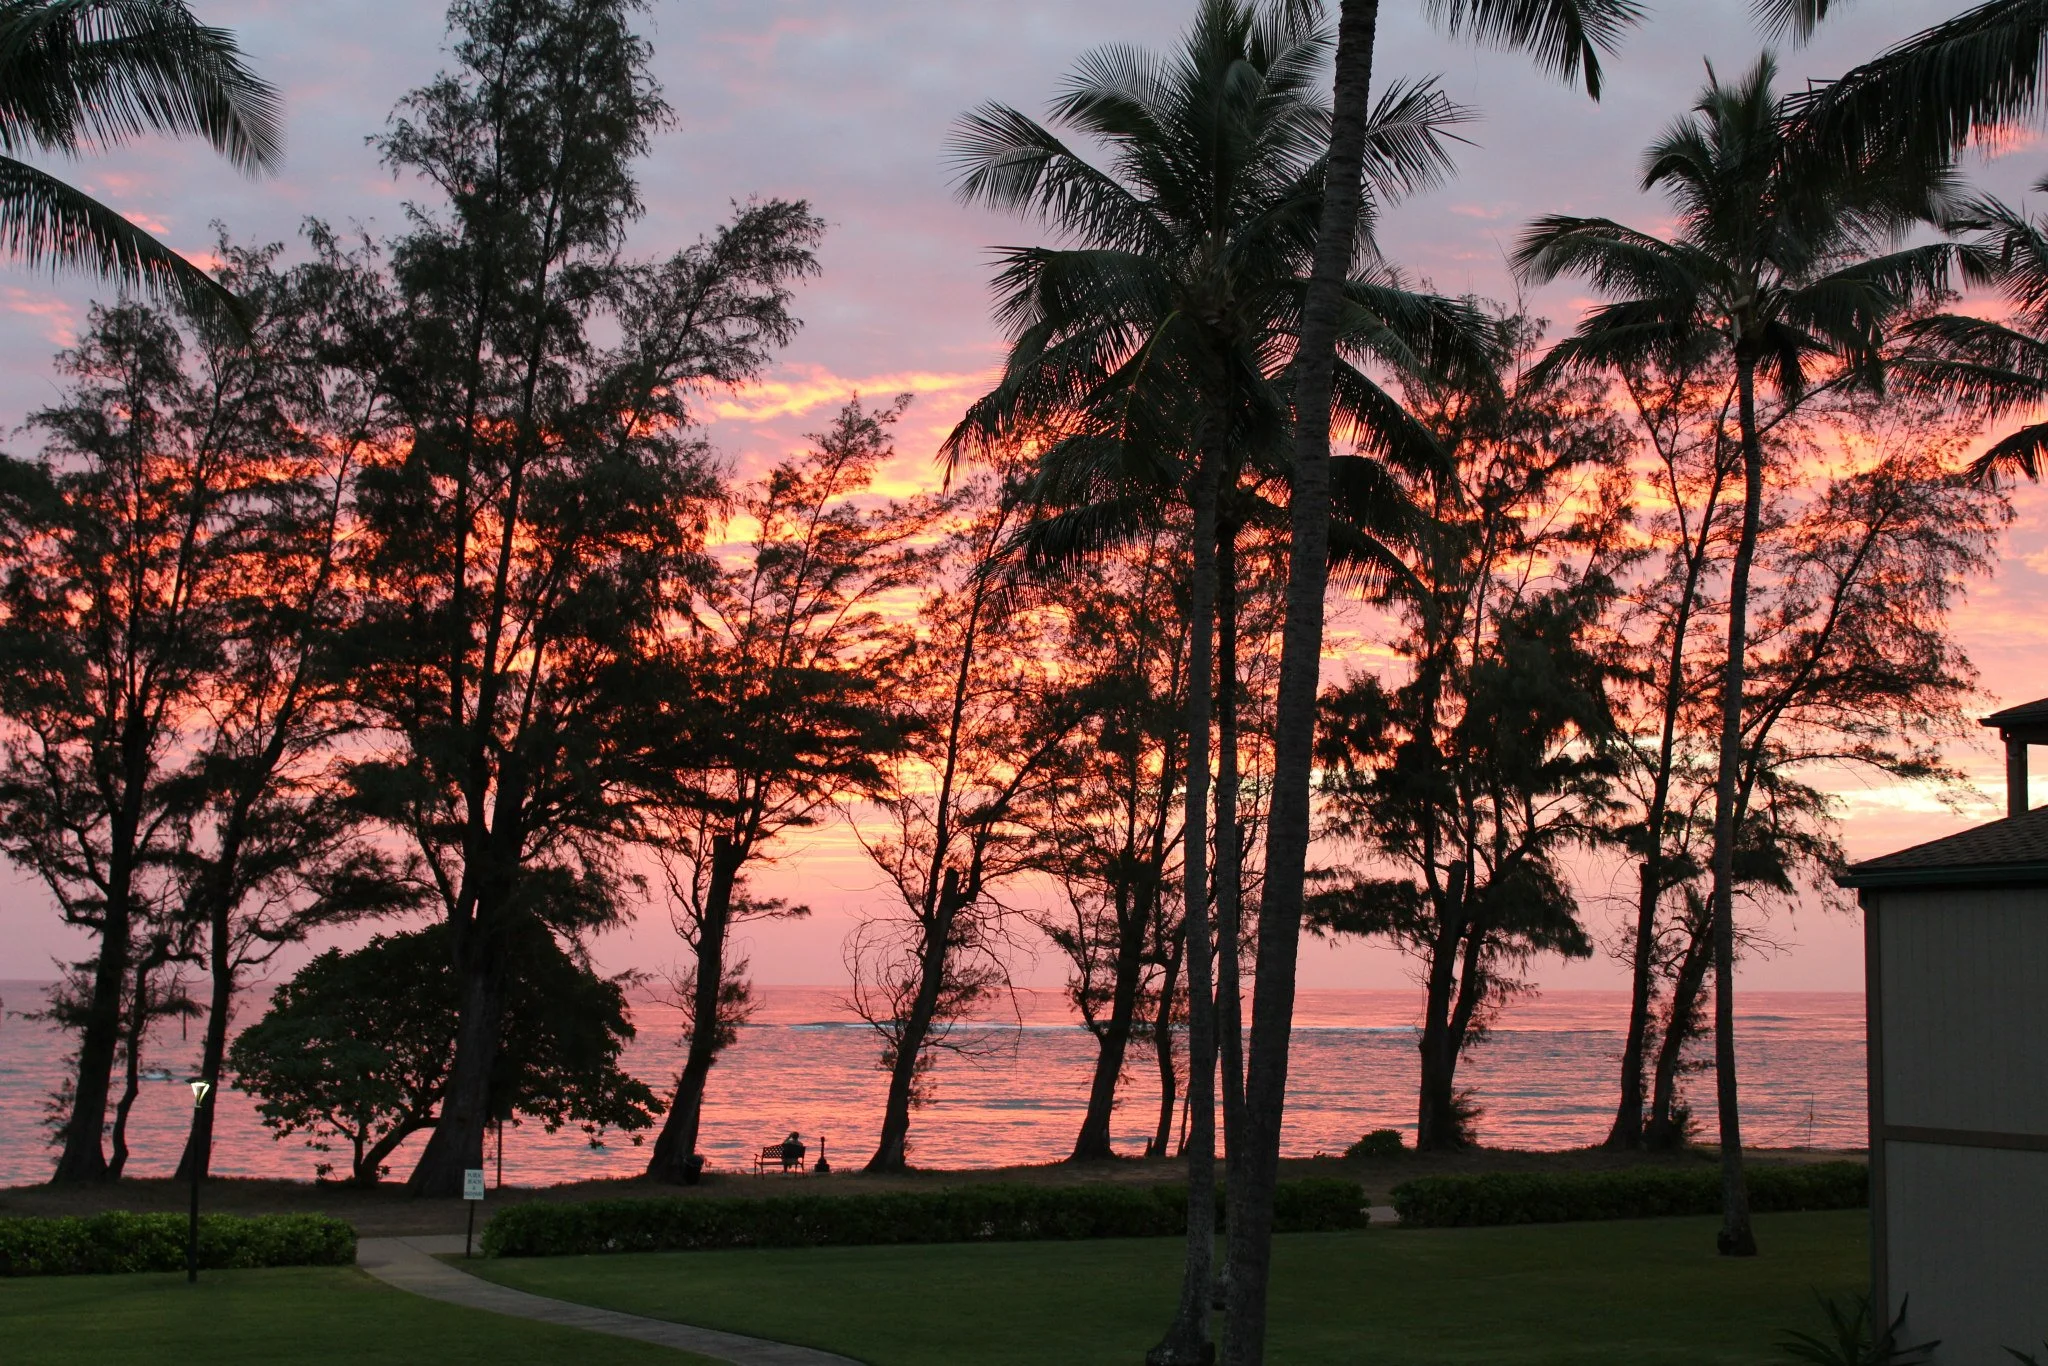 A particularly breathtaking sunrise in Kauai! 